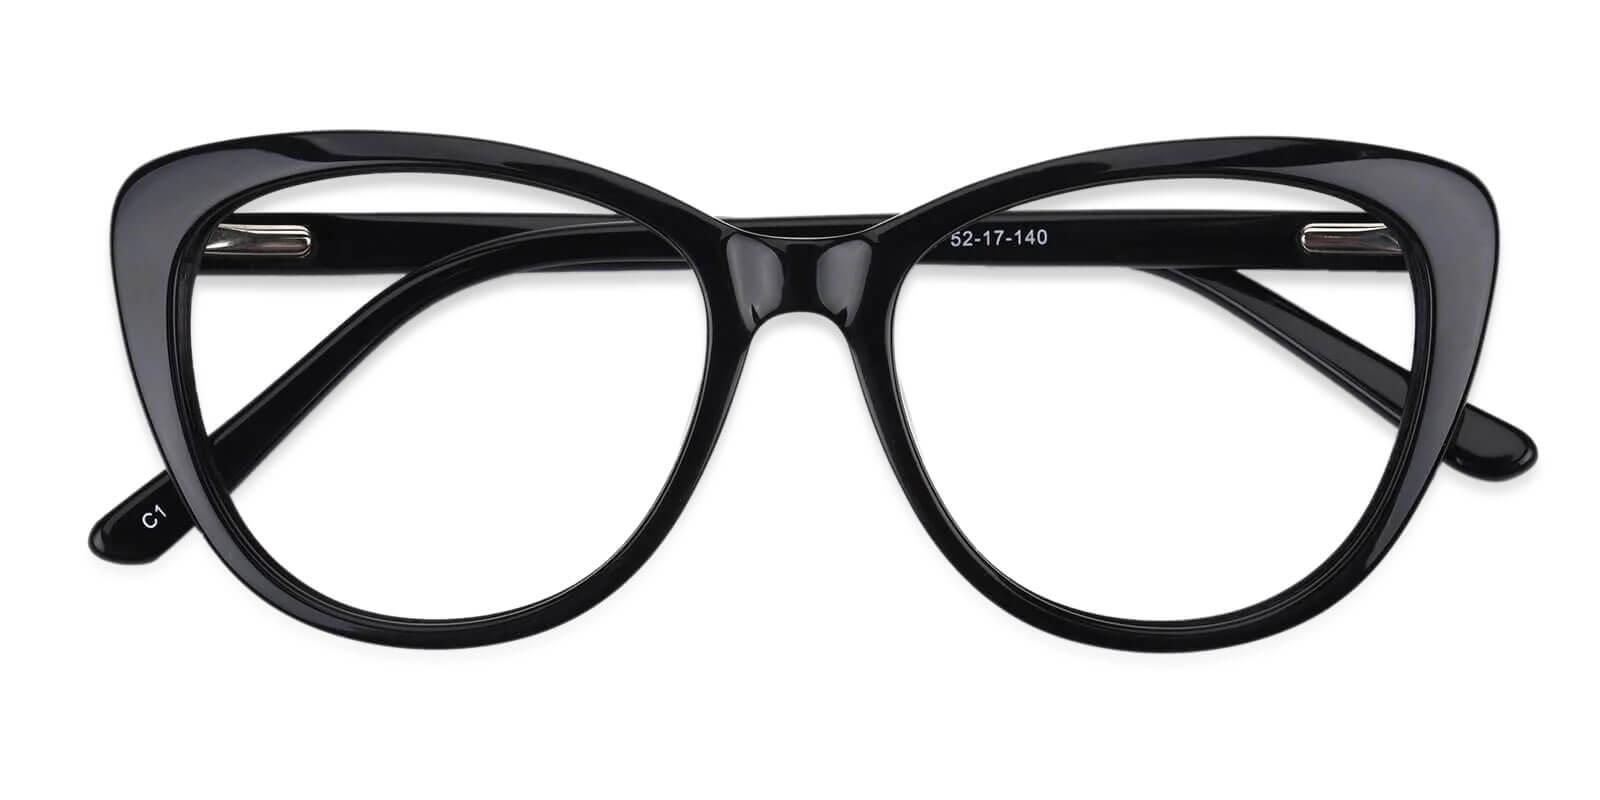 Theory Black Acetate Eyeglasses , SpringHinges , UniversalBridgeFit Frames from ABBE Glasses